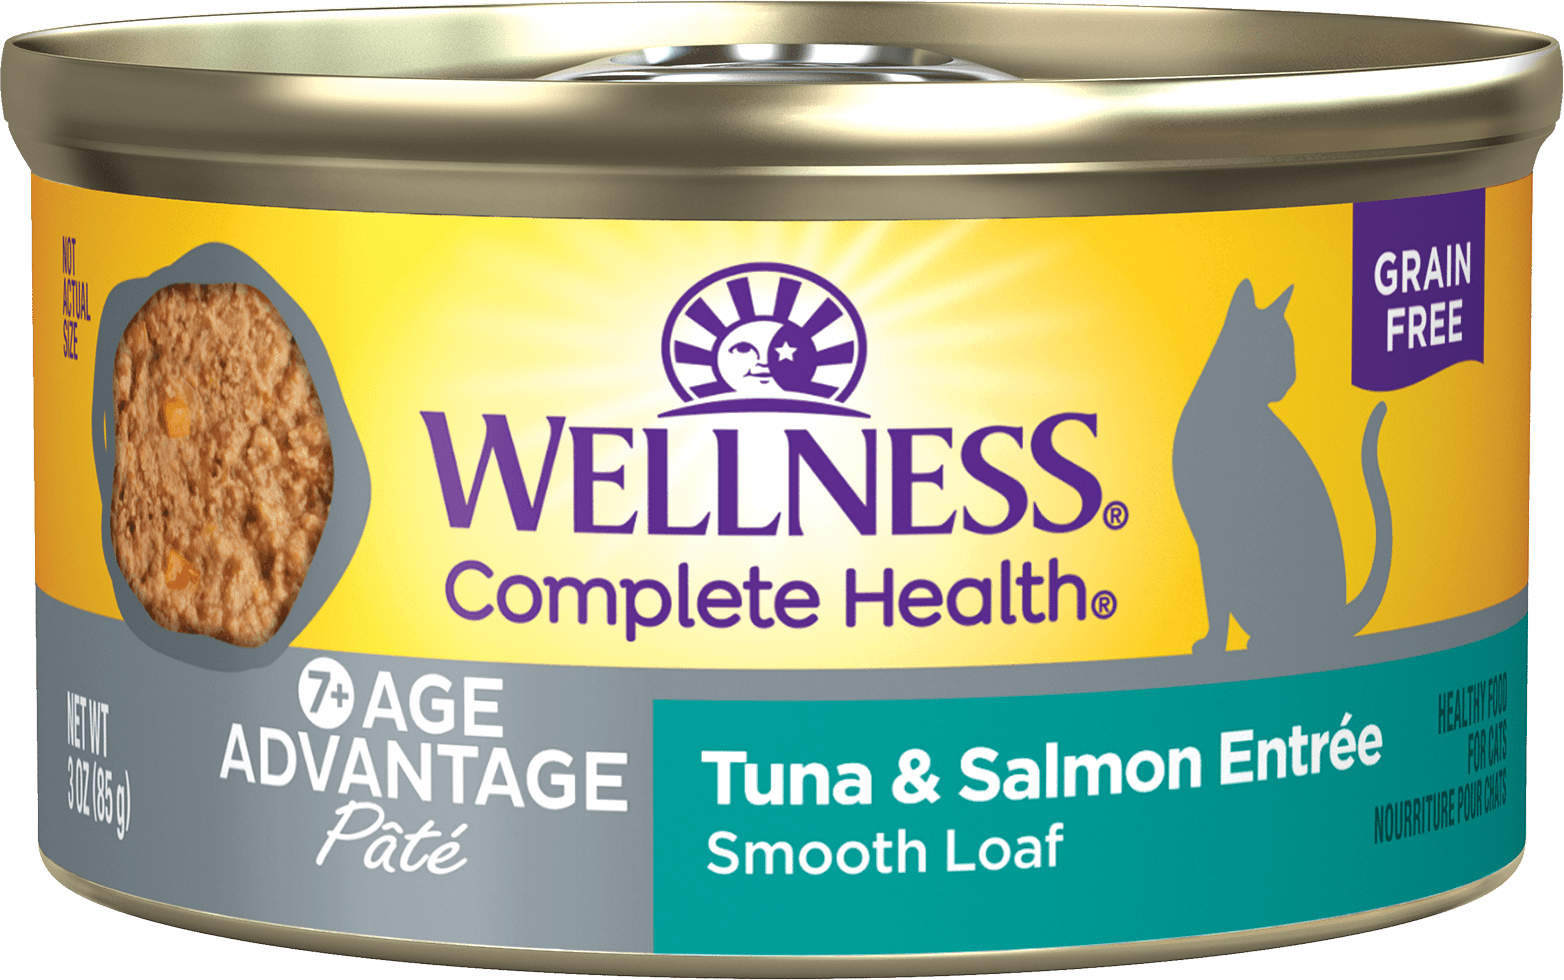 Wellness Complete Health Age Advantage Patée Age Advantage: Tuna & Salmon